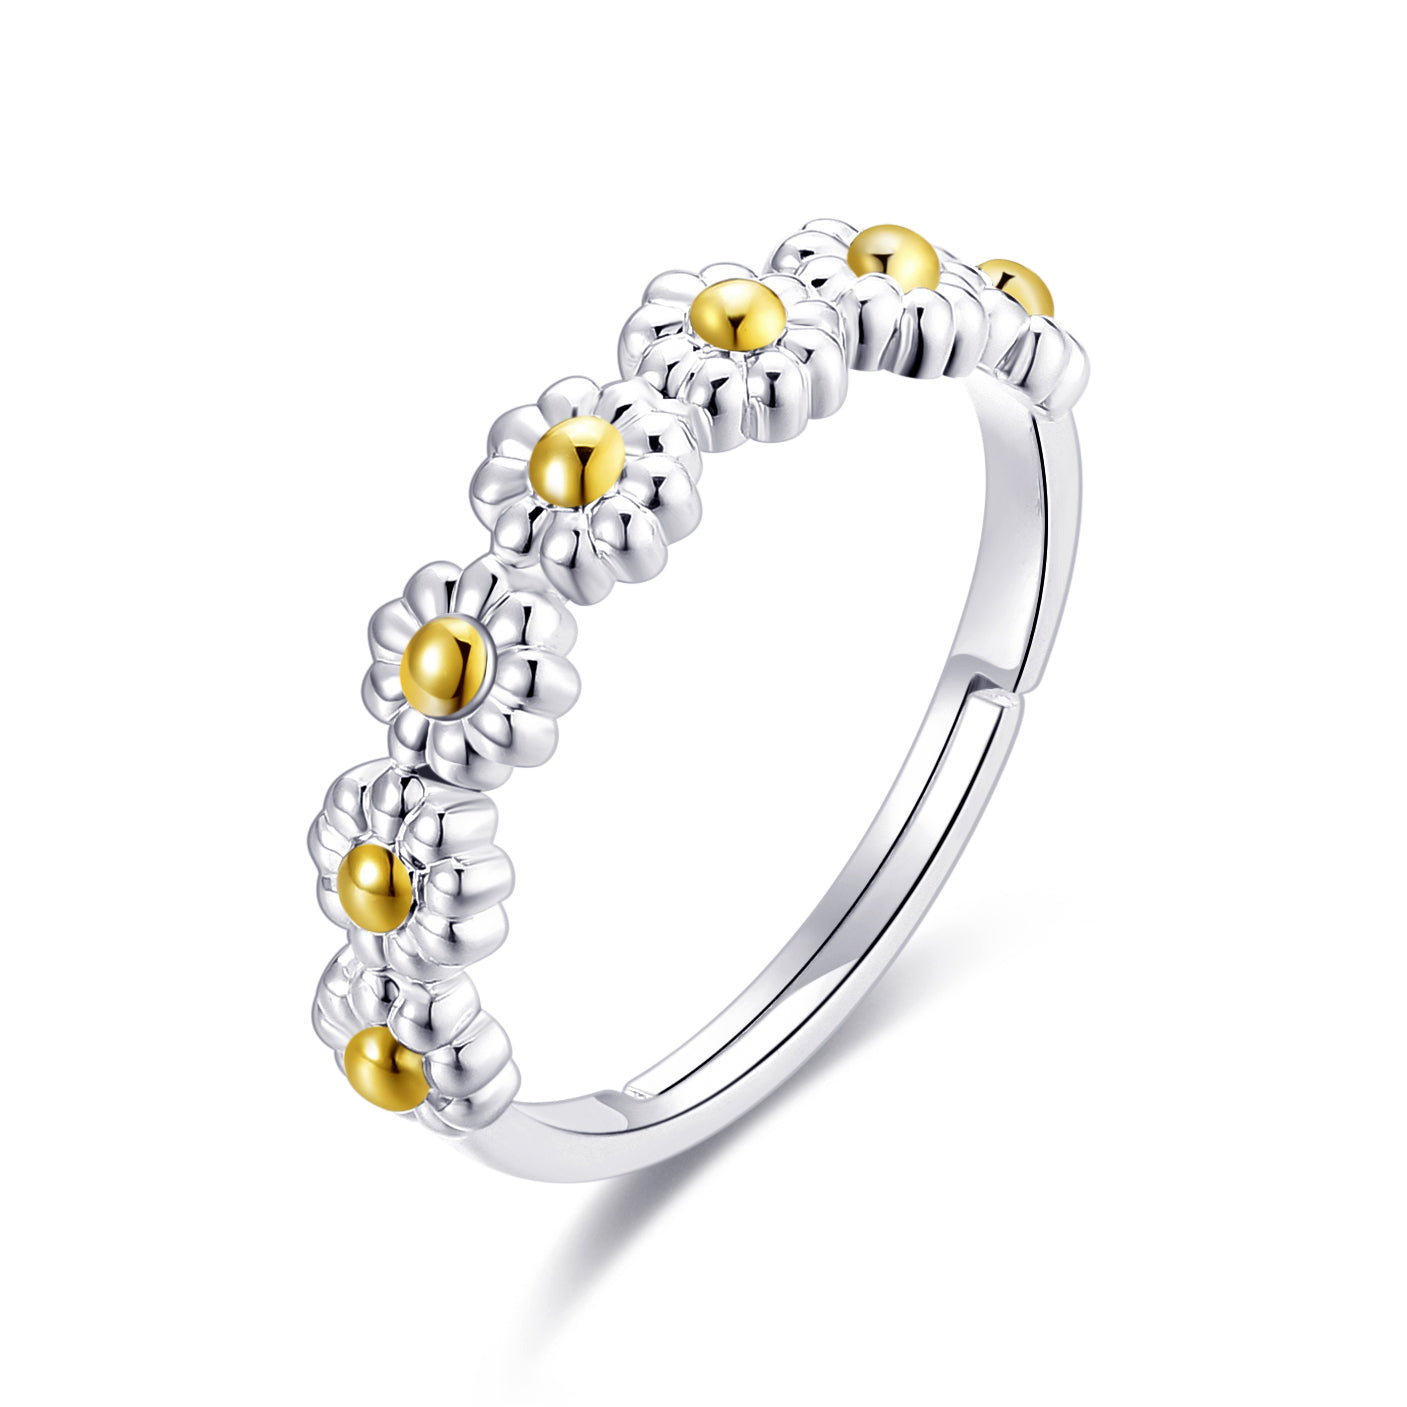 Adjustable Daisy Chain Ring by Philip Jones Jewellery